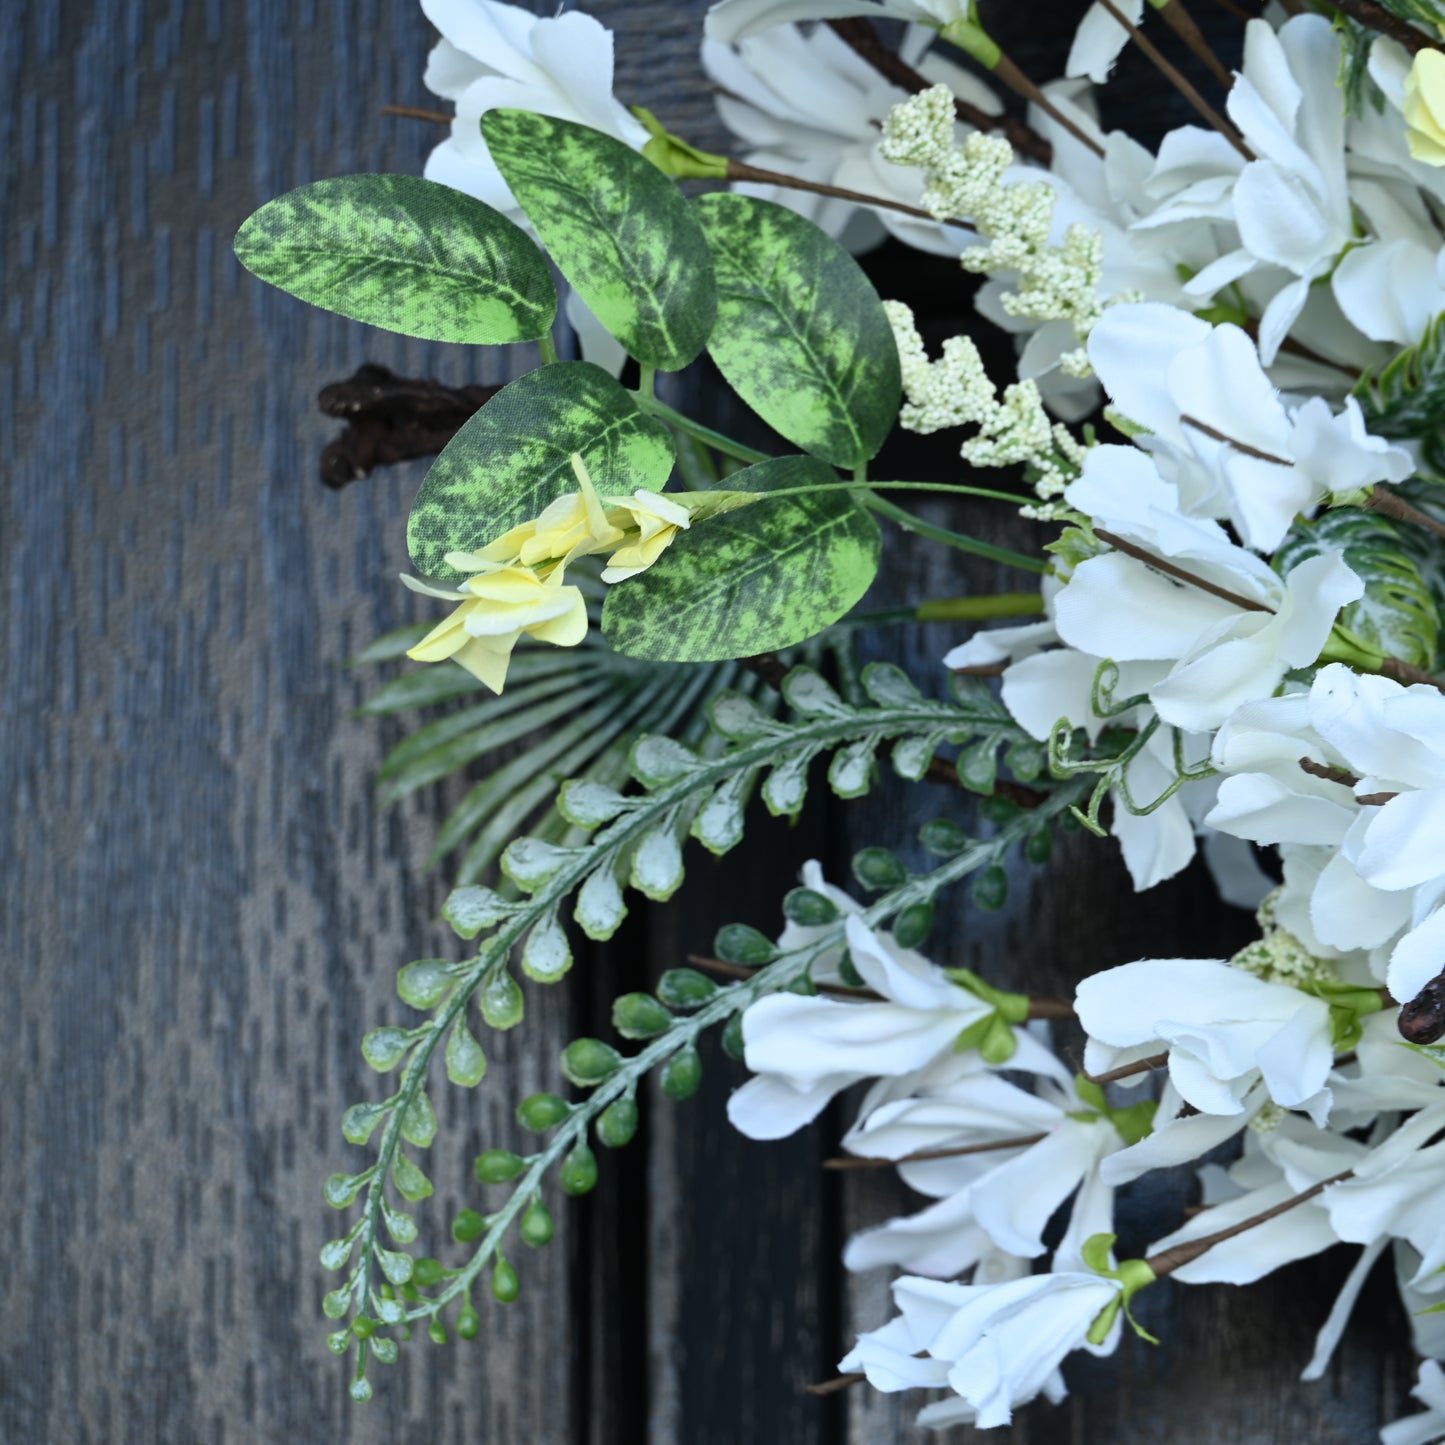 Front door wreath | Spring Wreath | 18inch Wreath |White forsythia